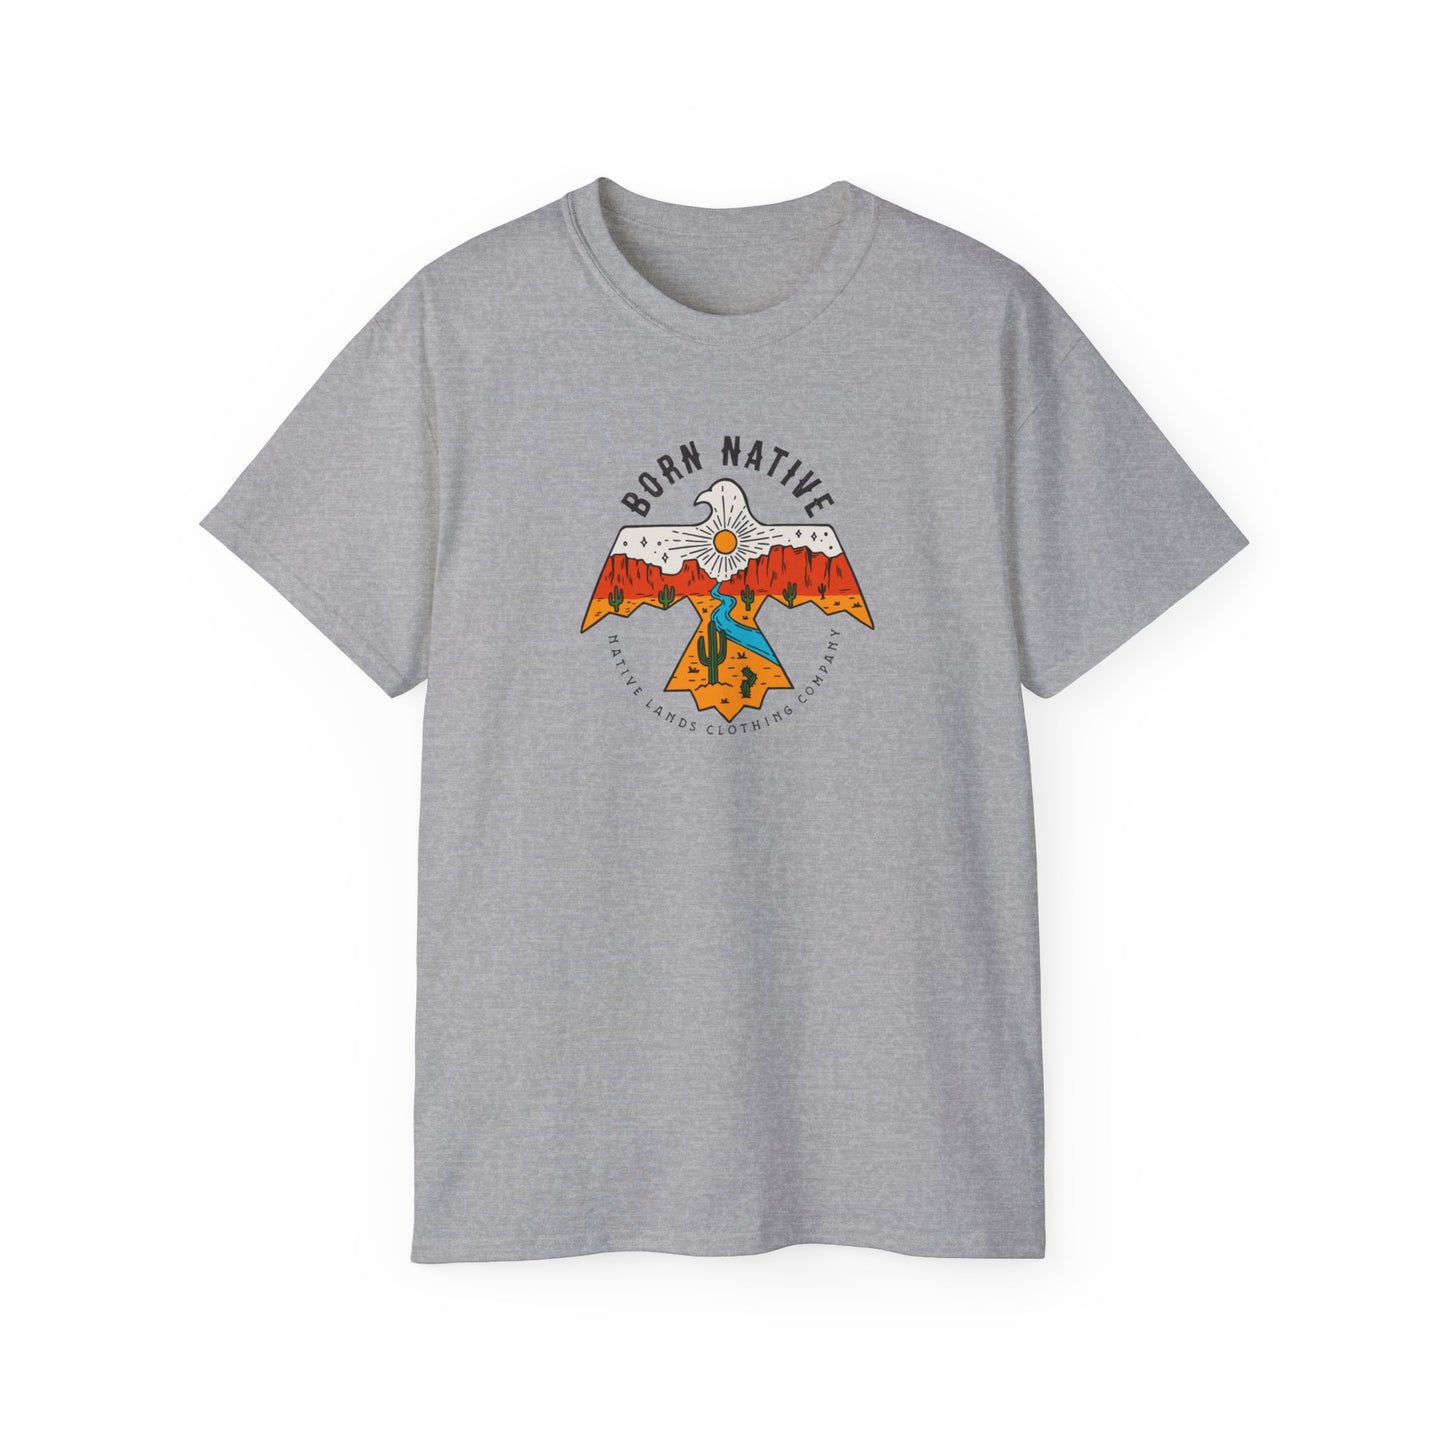 Born Native Shirt Thunderbird Native American